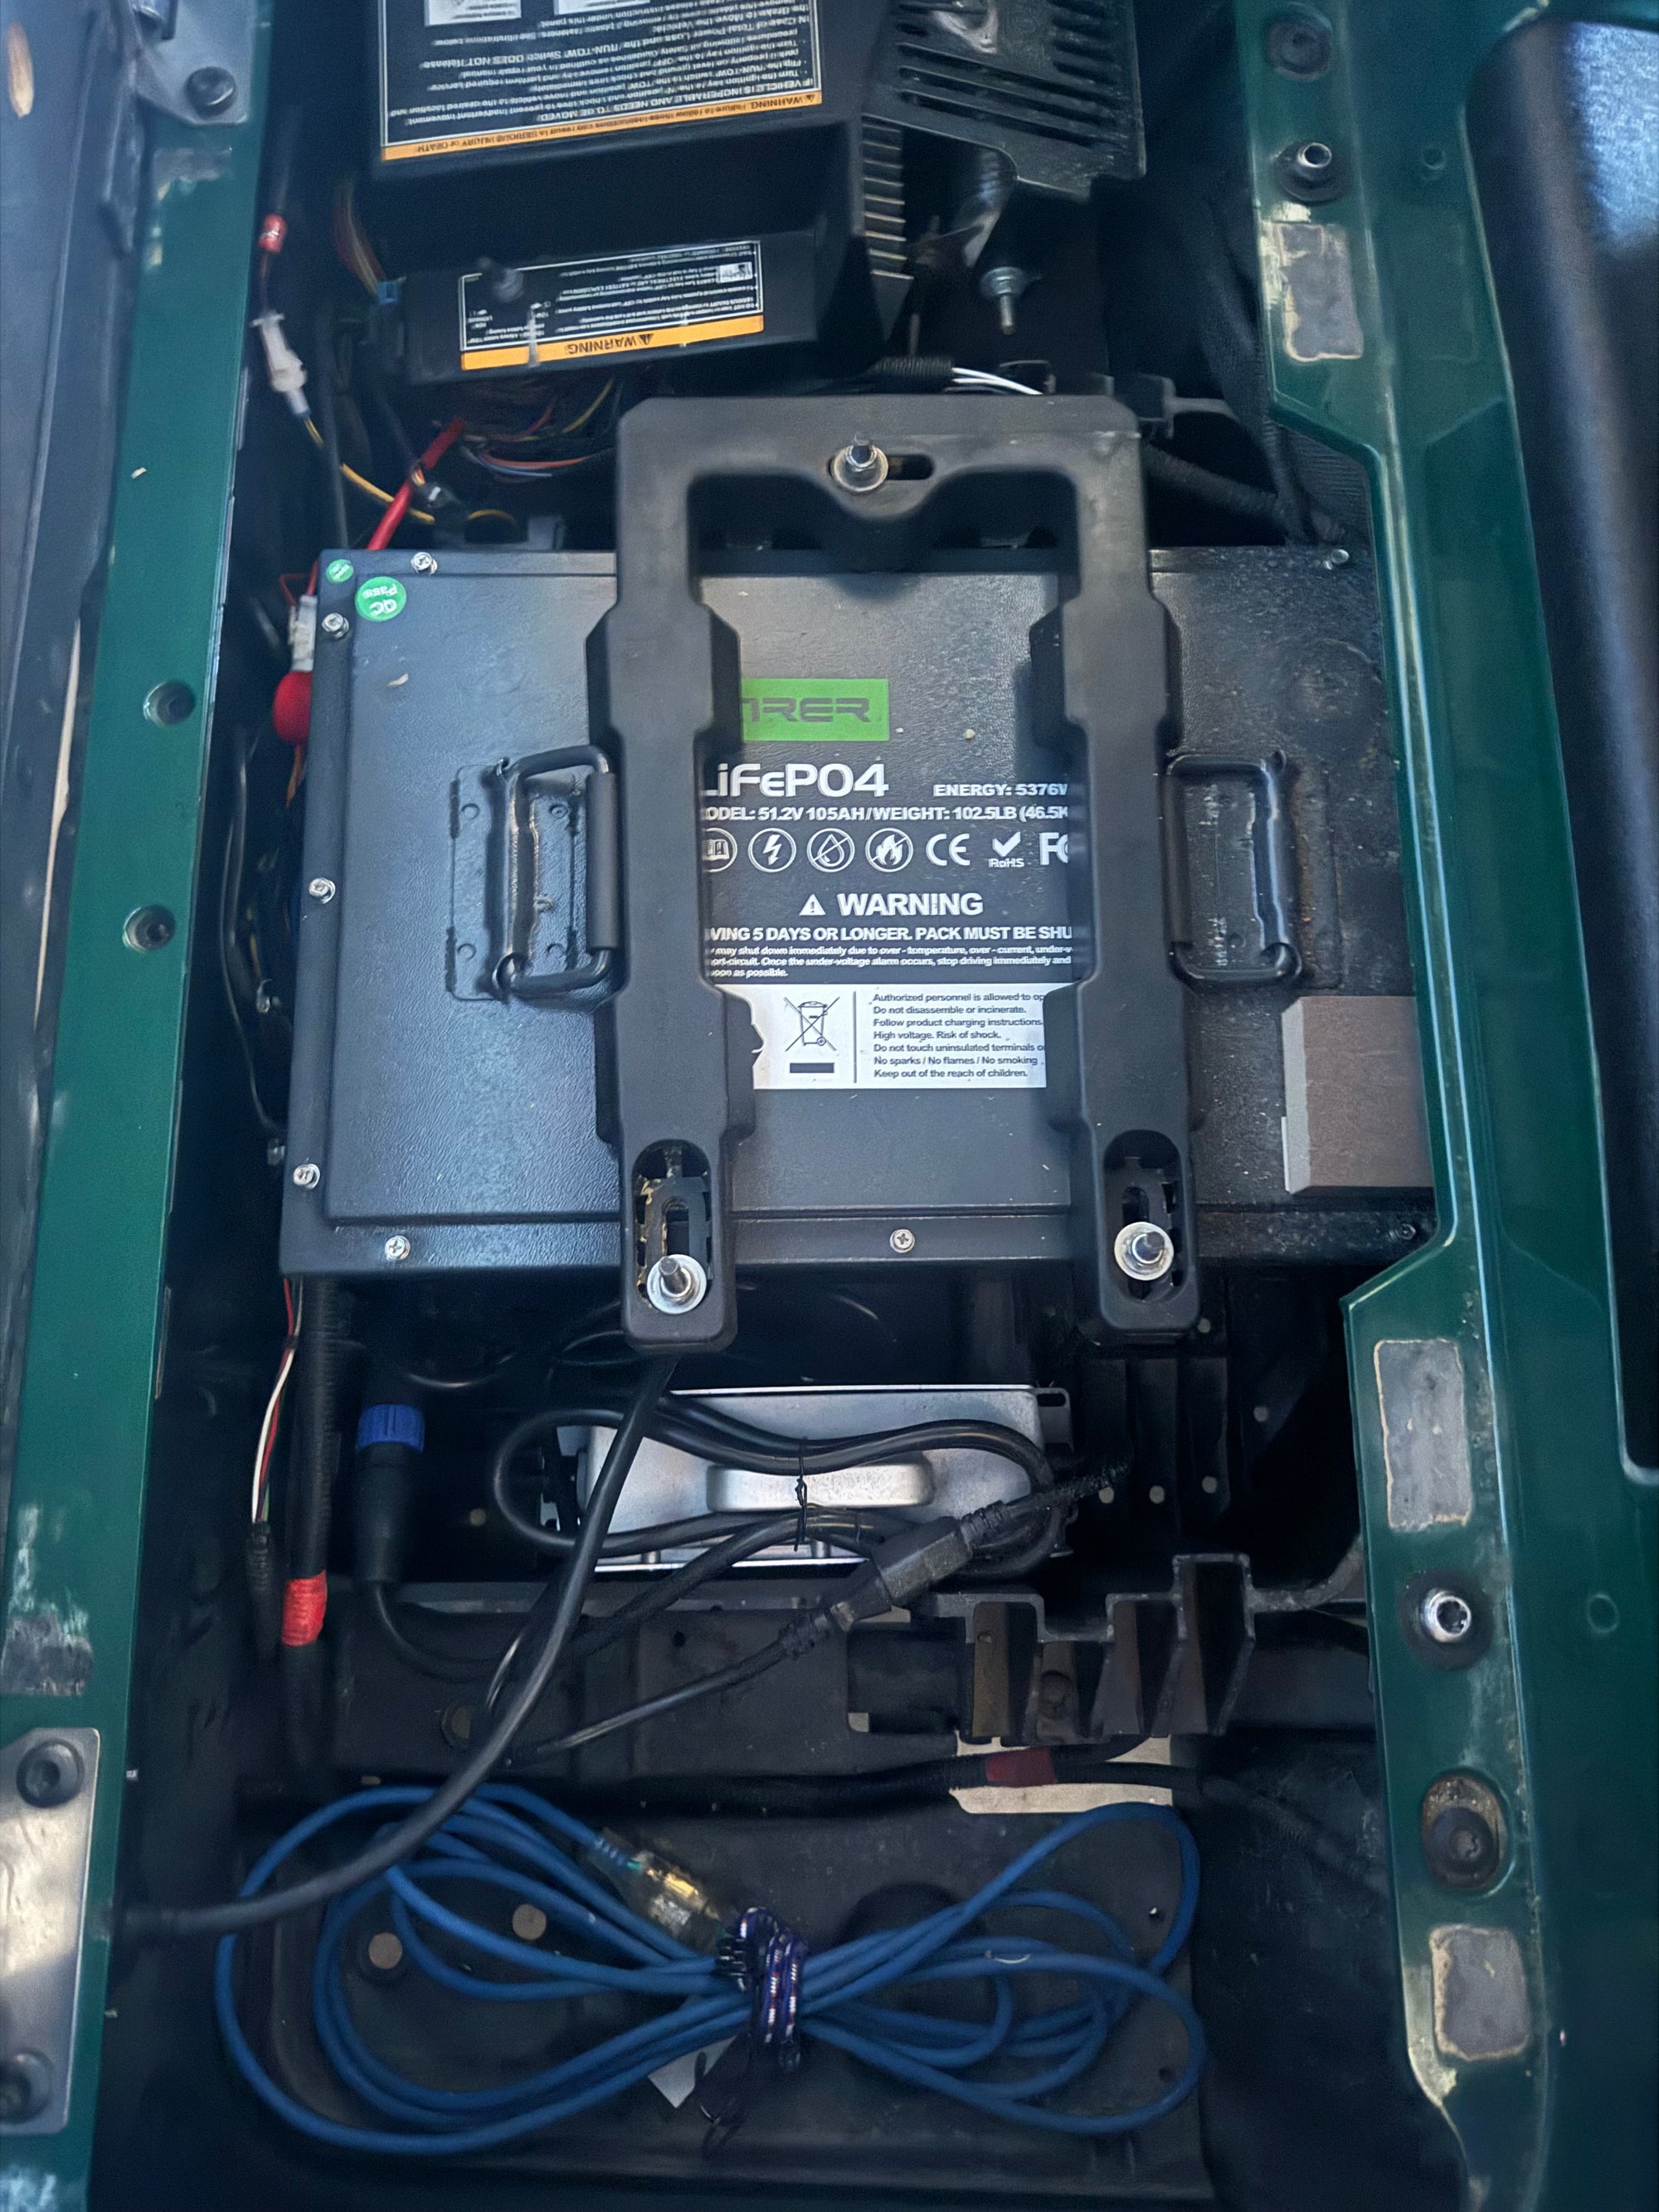 User installs golf cart lithium battery into Club Car